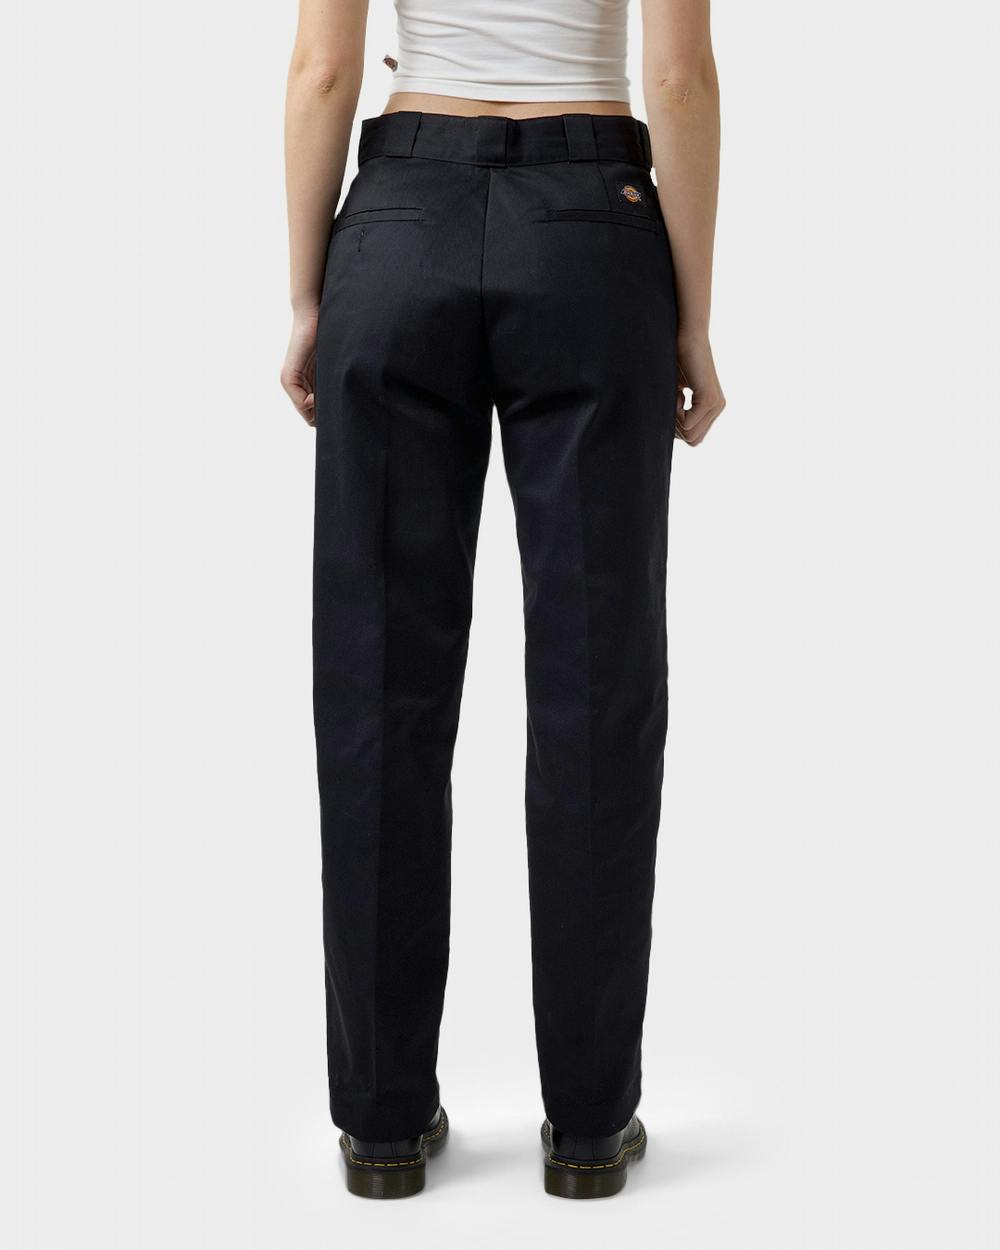 Dickies 874 straight fit work chino pants in black